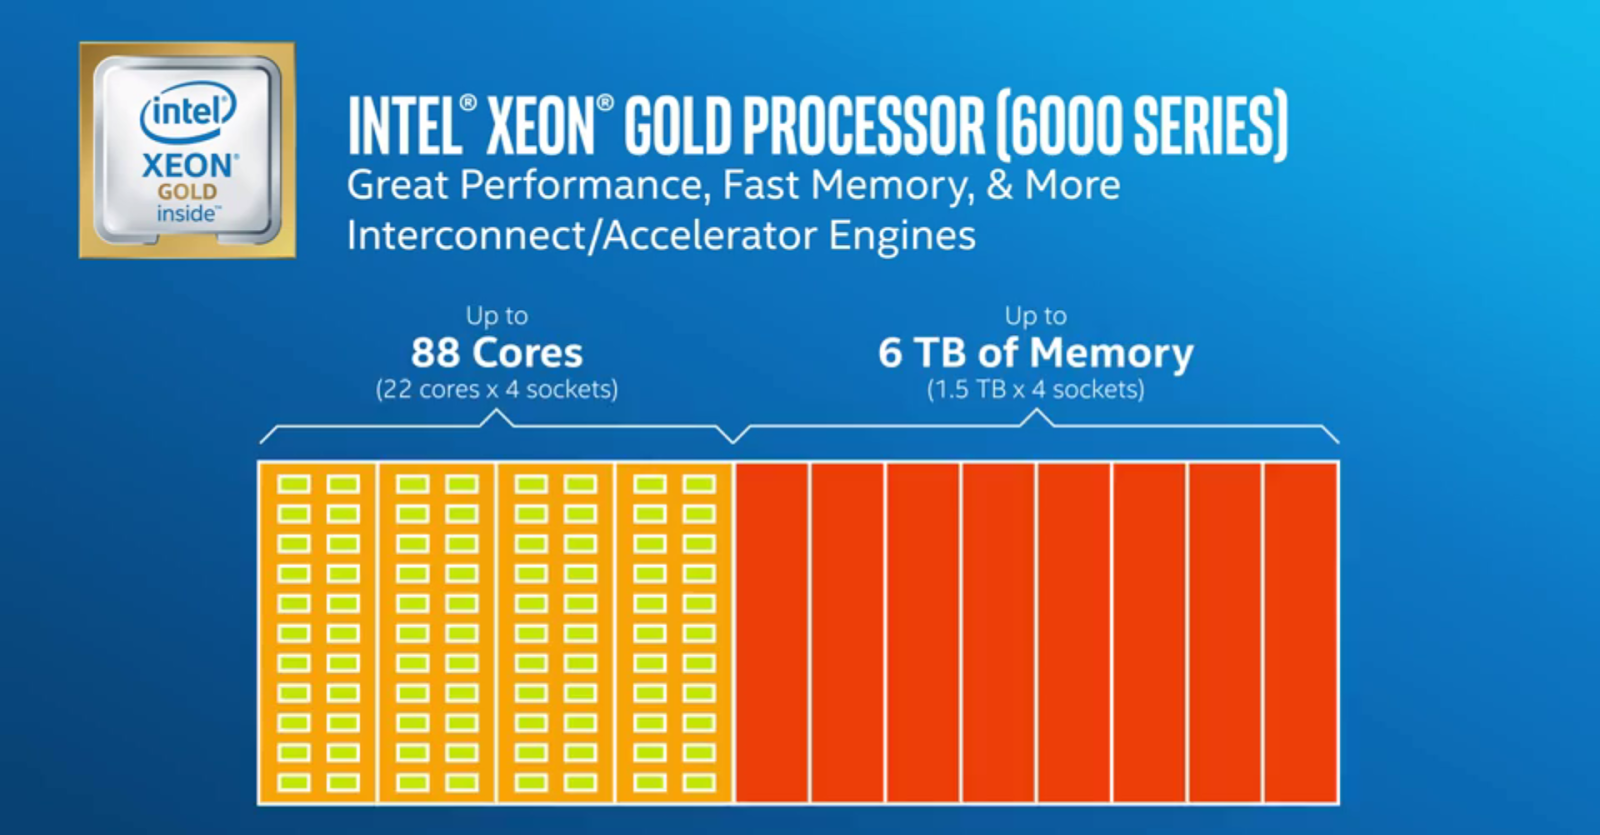 Xeon r gold